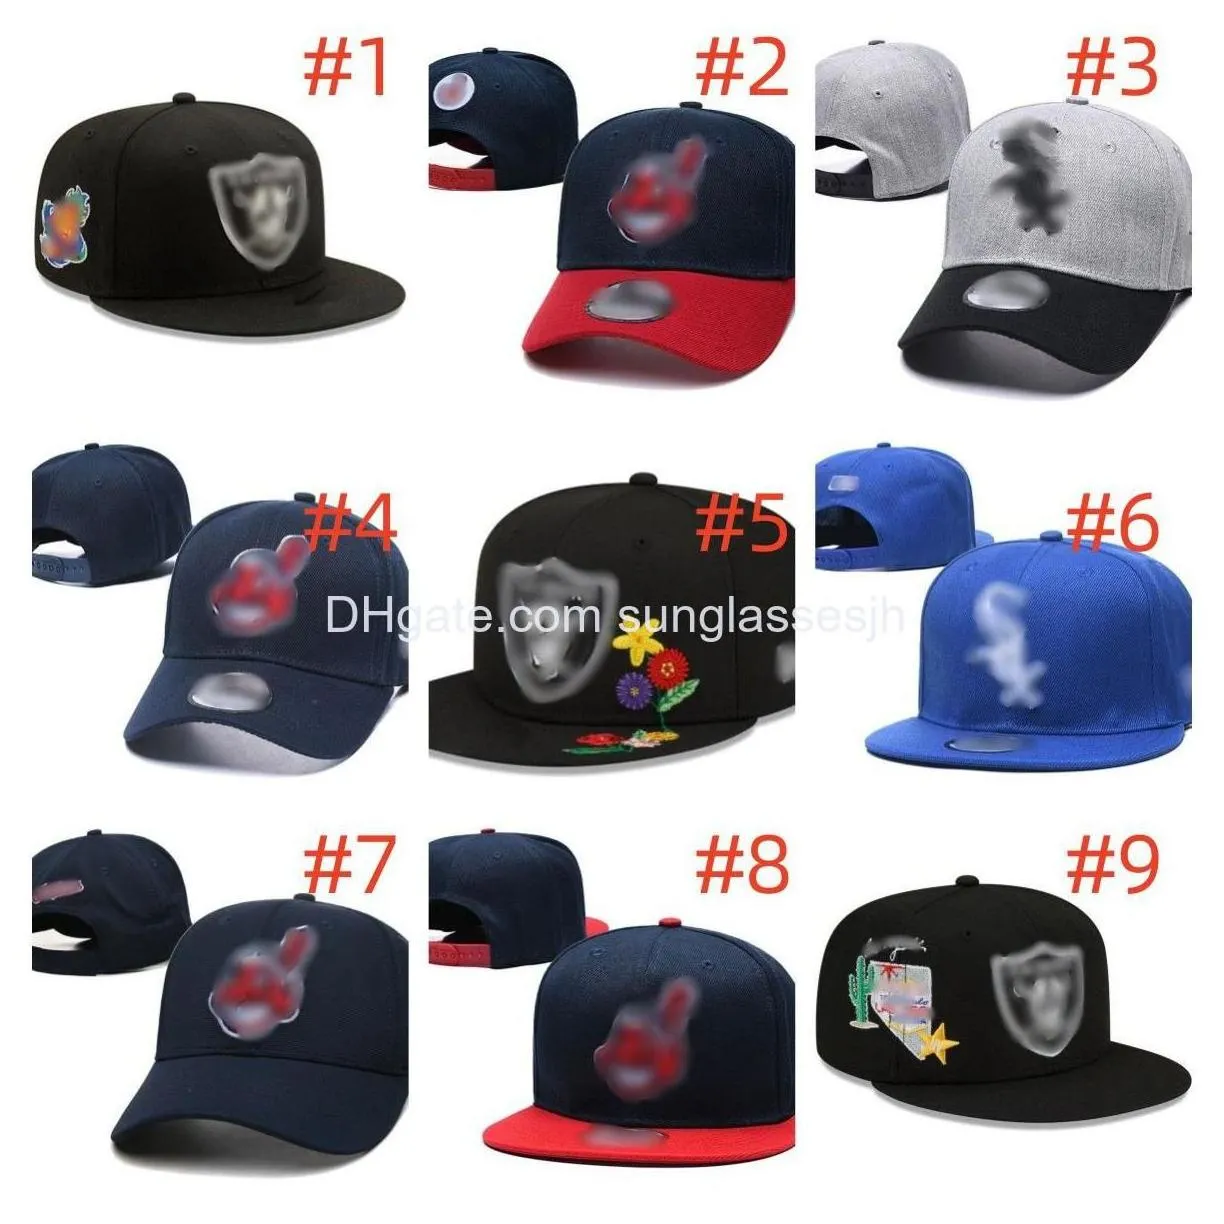 ball caps all teams logo basketball snapback baseball snapbacks unisex designer hat cotton embroidery football hats hip hop sports